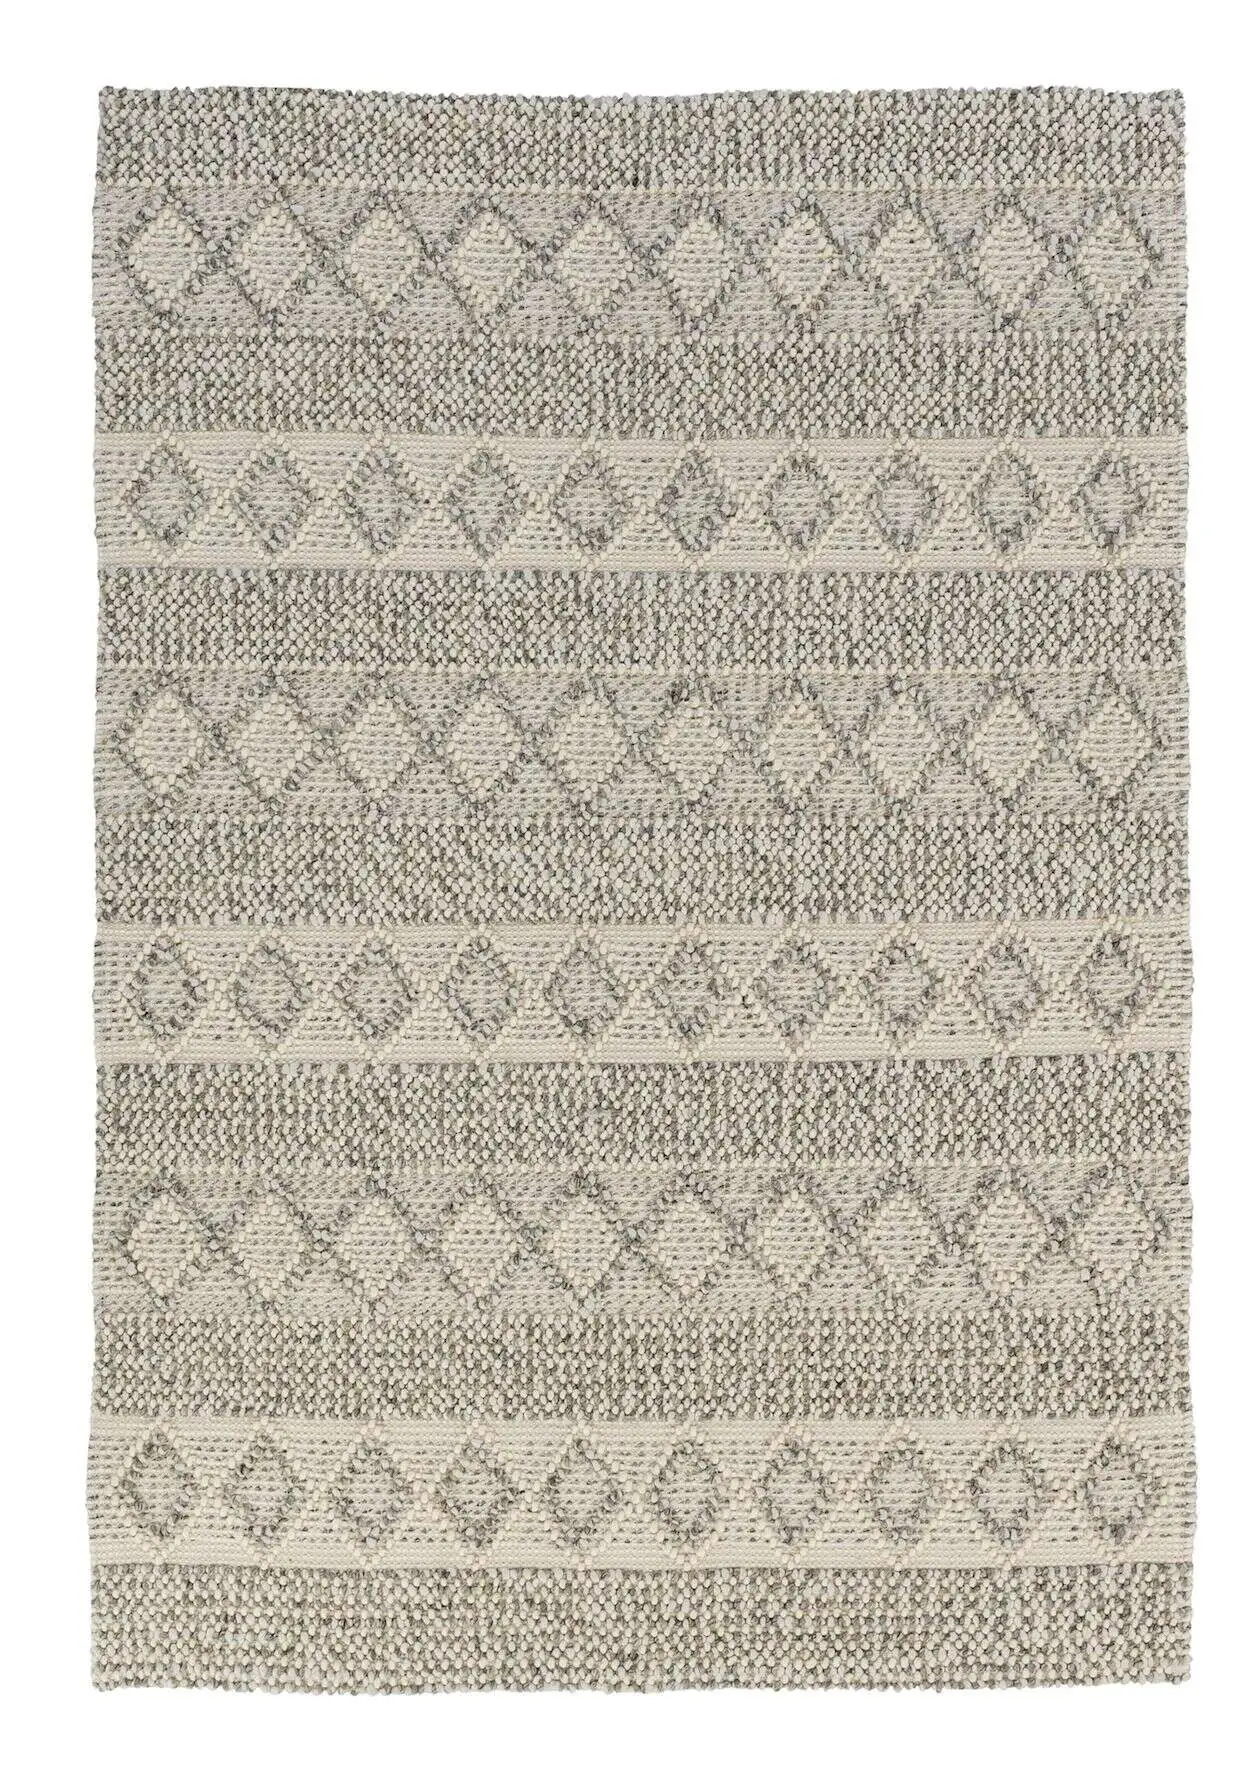  Teppich Alva 6011-191-006 im Wunschmaß